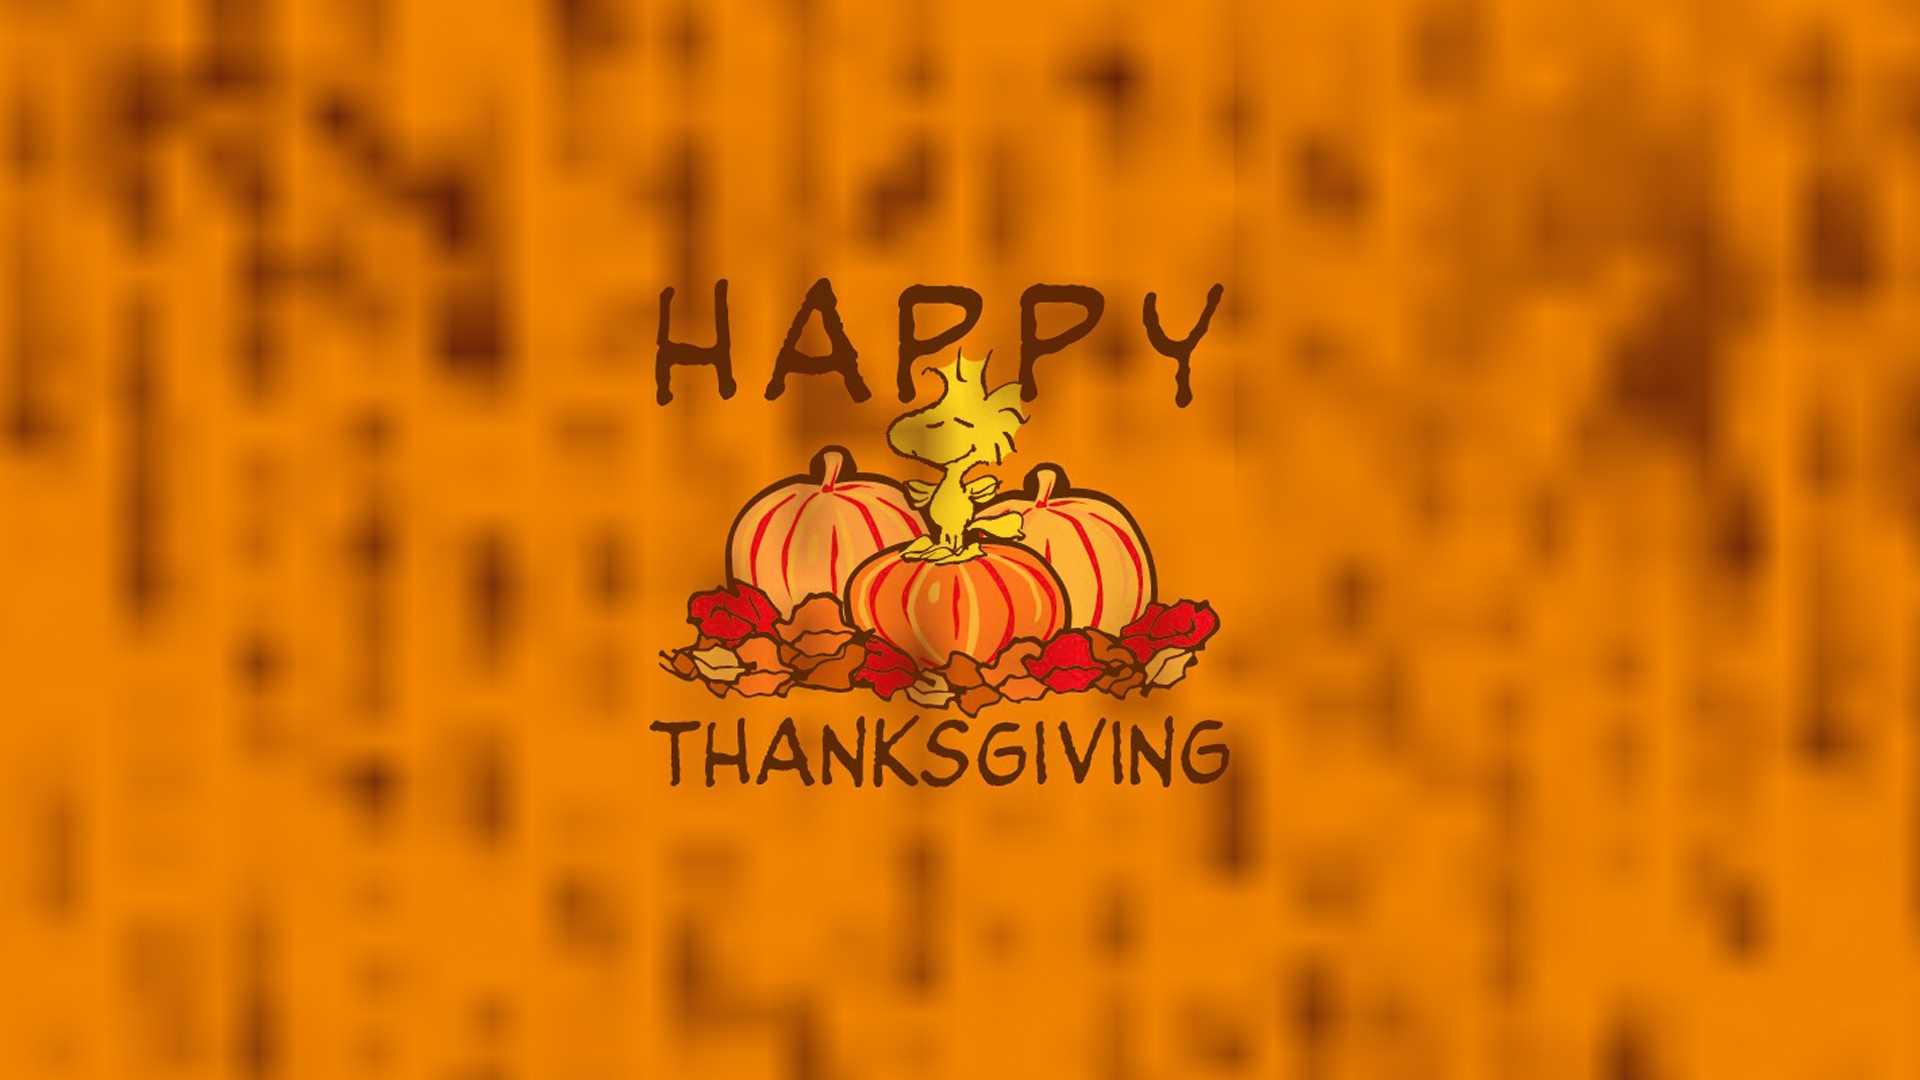 Thanksgiving Day desktop background